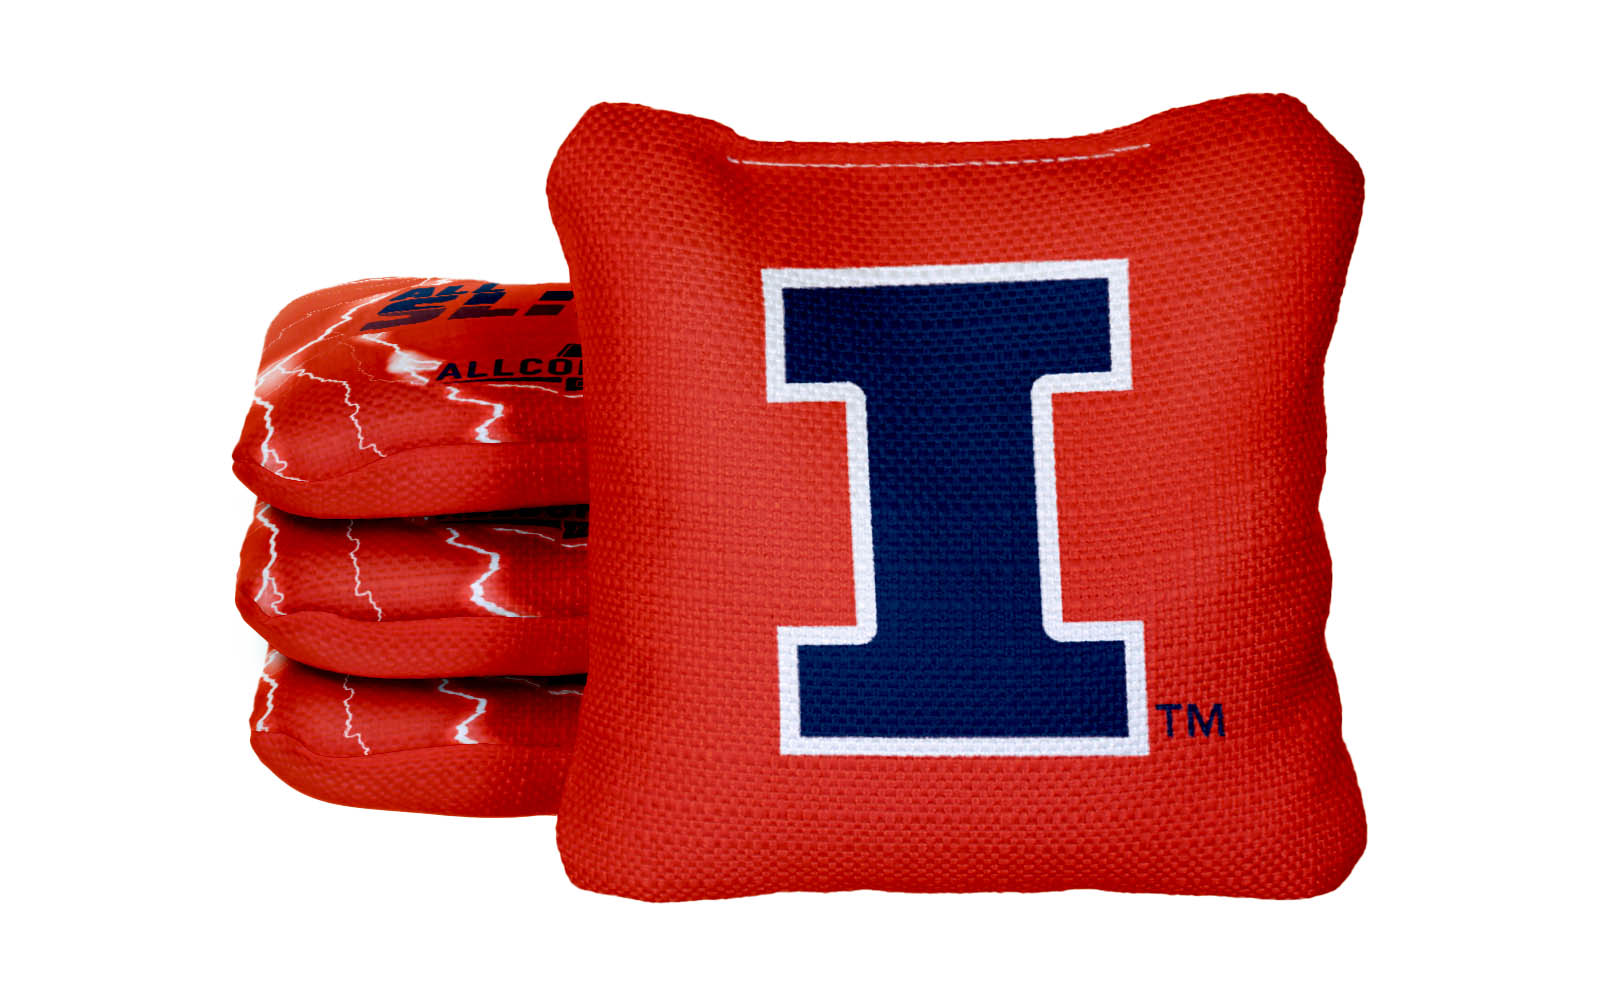 Officially Licensed Collegiate Cornhole Bags - All-Slide 2.0 - Set of 4 - University of Illinois